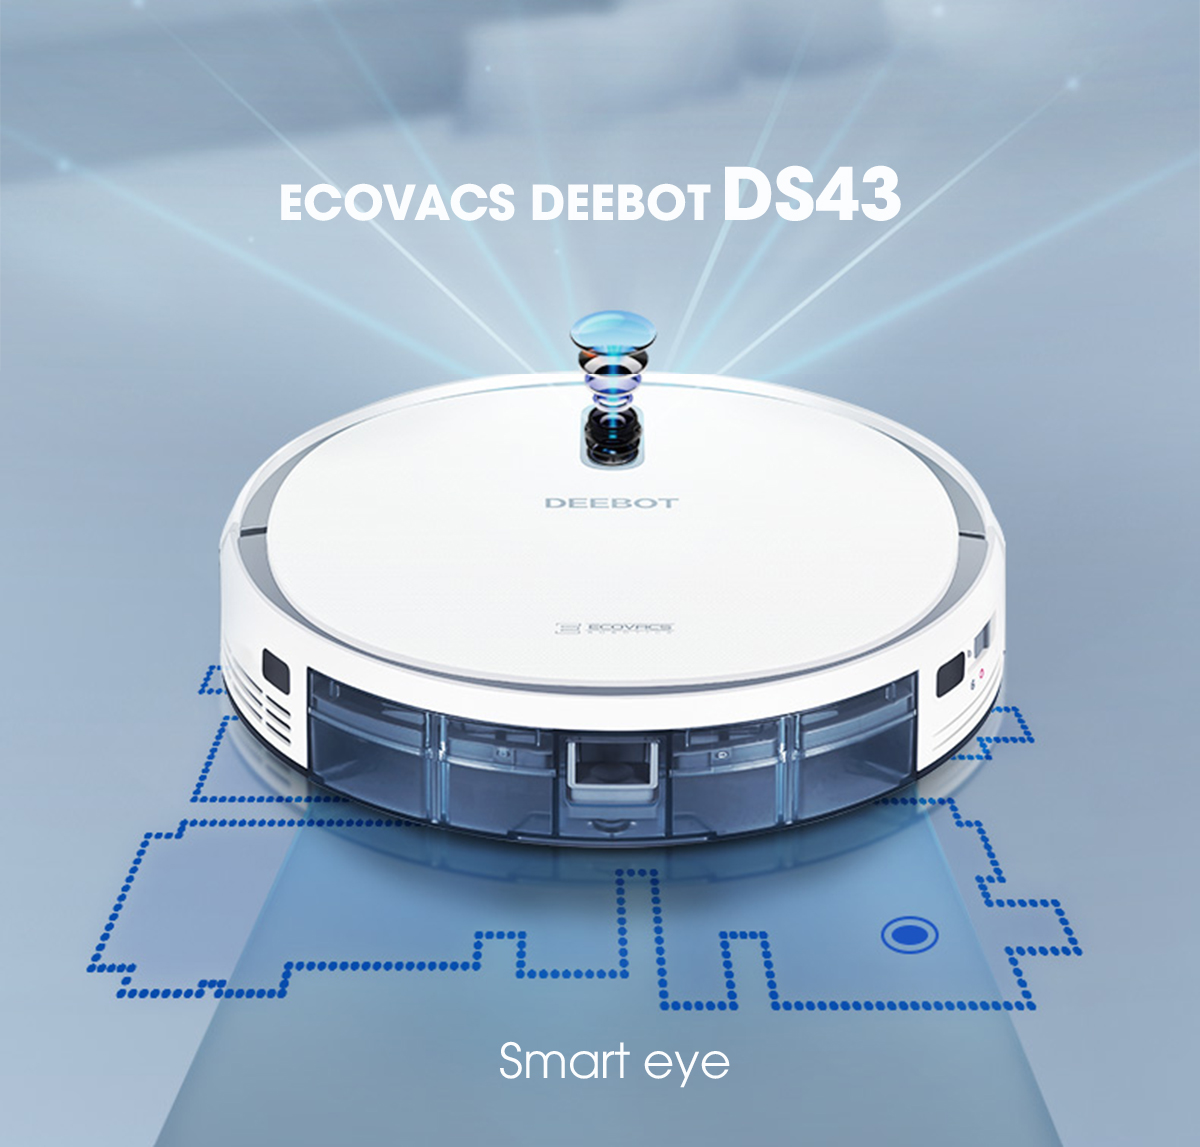 đánh giá ecovacs DS43C